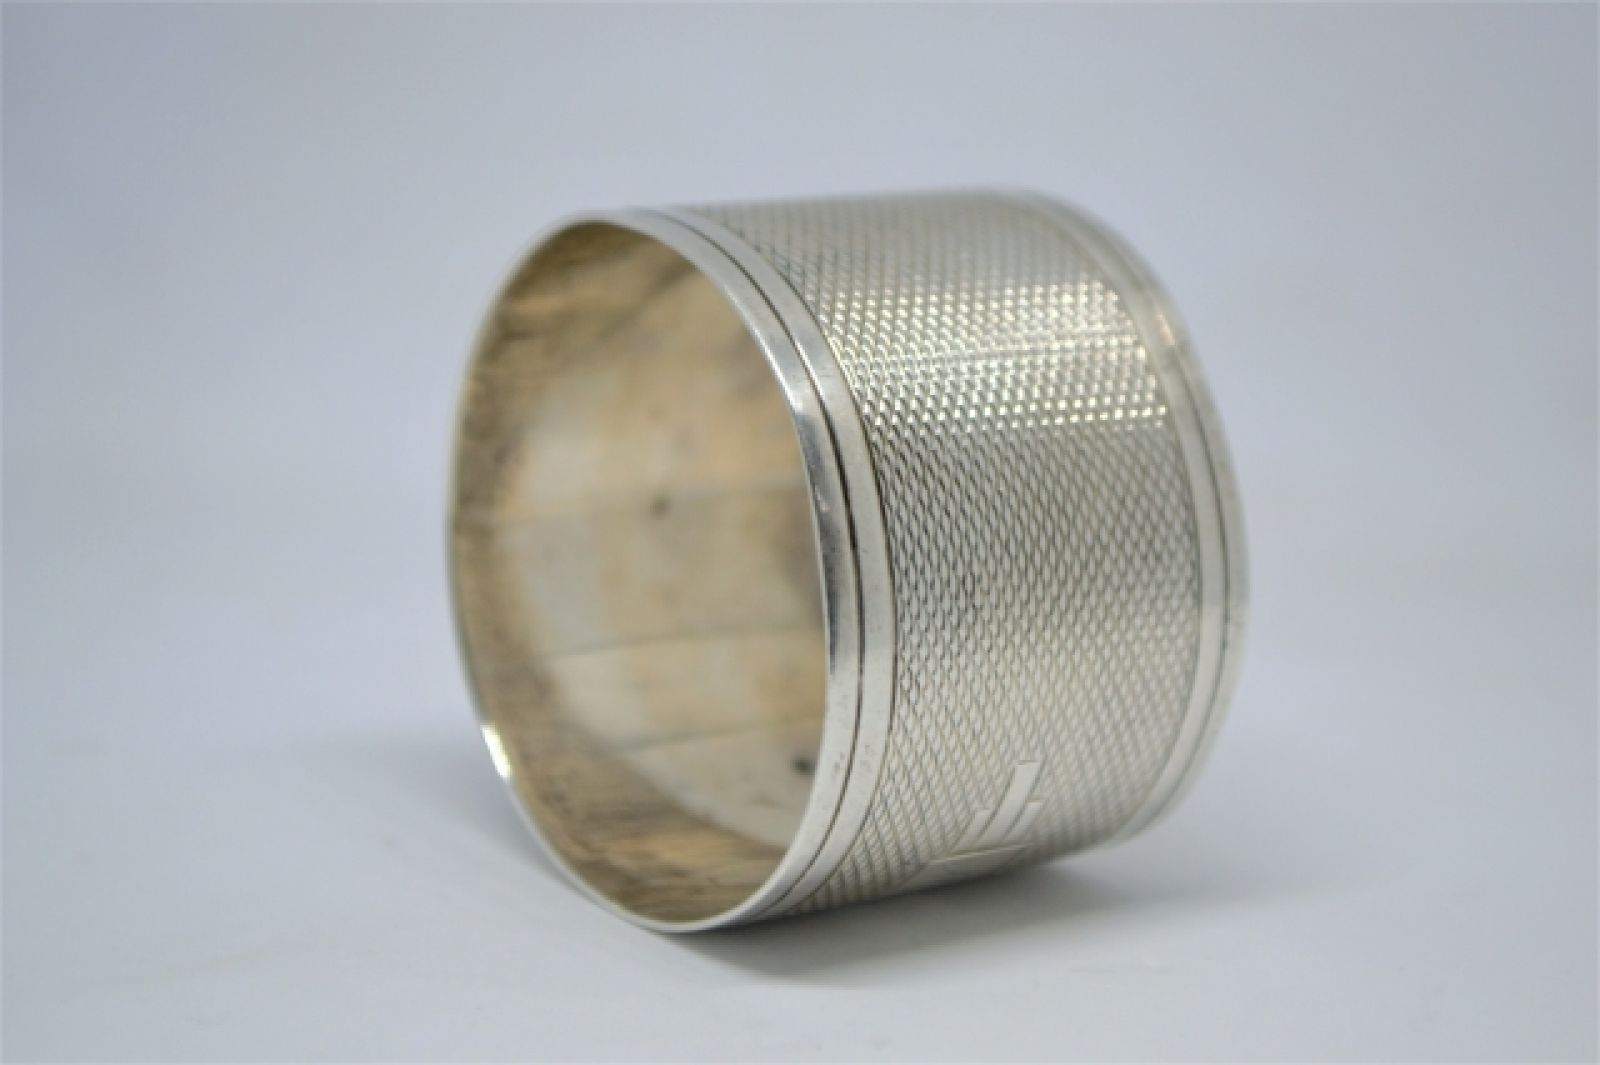 A Silver Napkin Ring